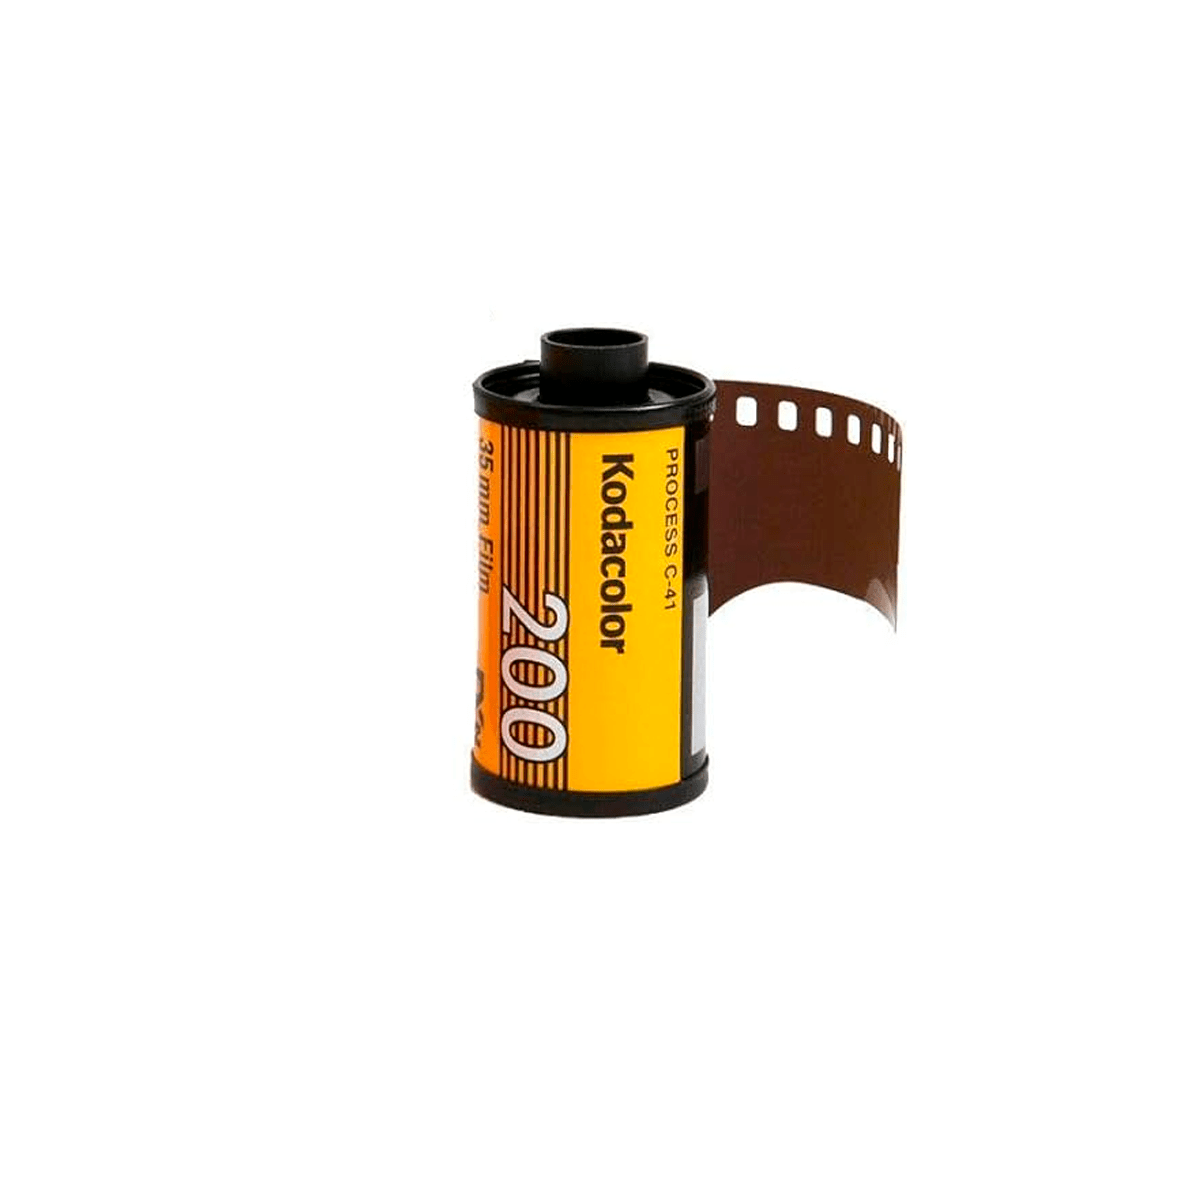 Kodak ColorPlus 200 35mm película negativa en color de 36 exp. (C-41)